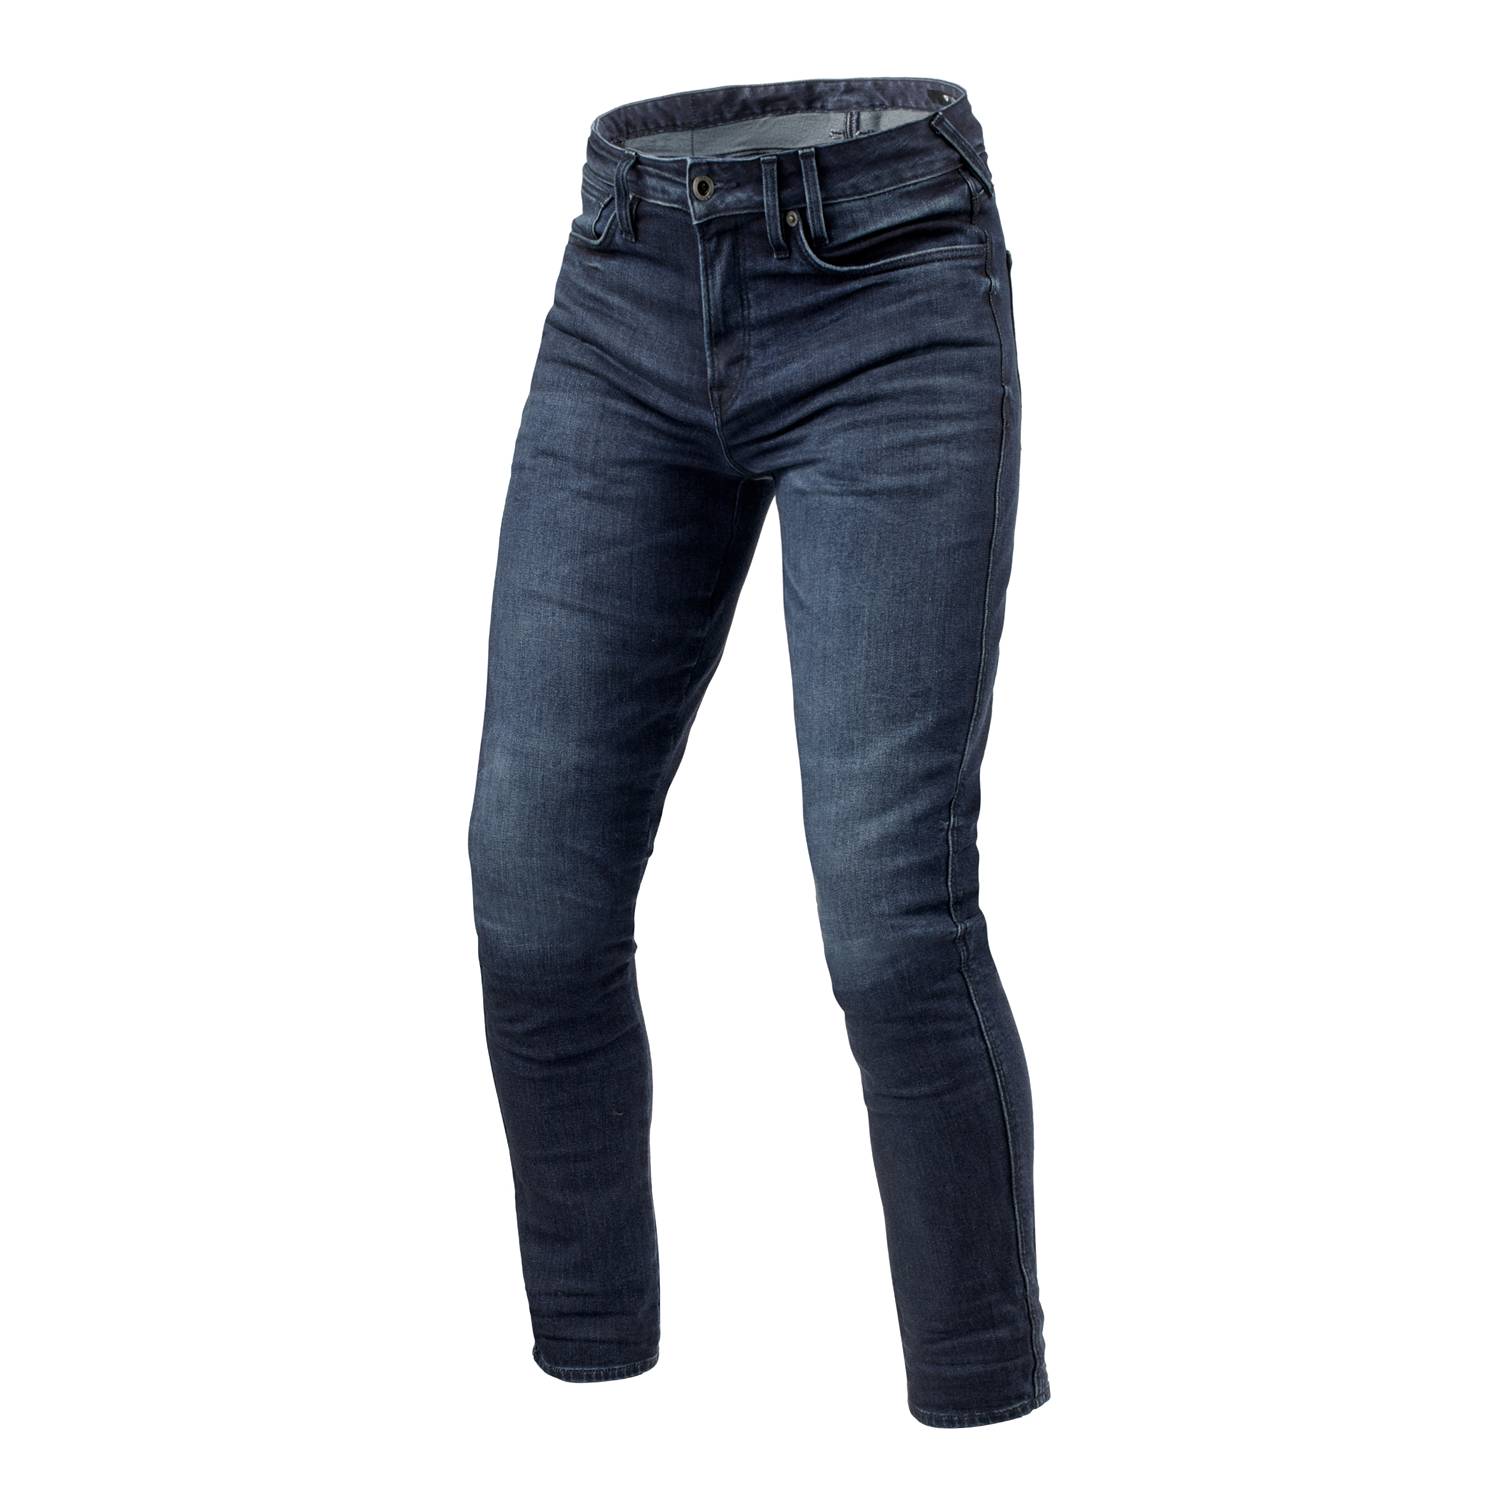 Image of REV'IT! Jeans Carlin SK Dark Blue Used L36 Motorcycle Jeans Talla L36/W36